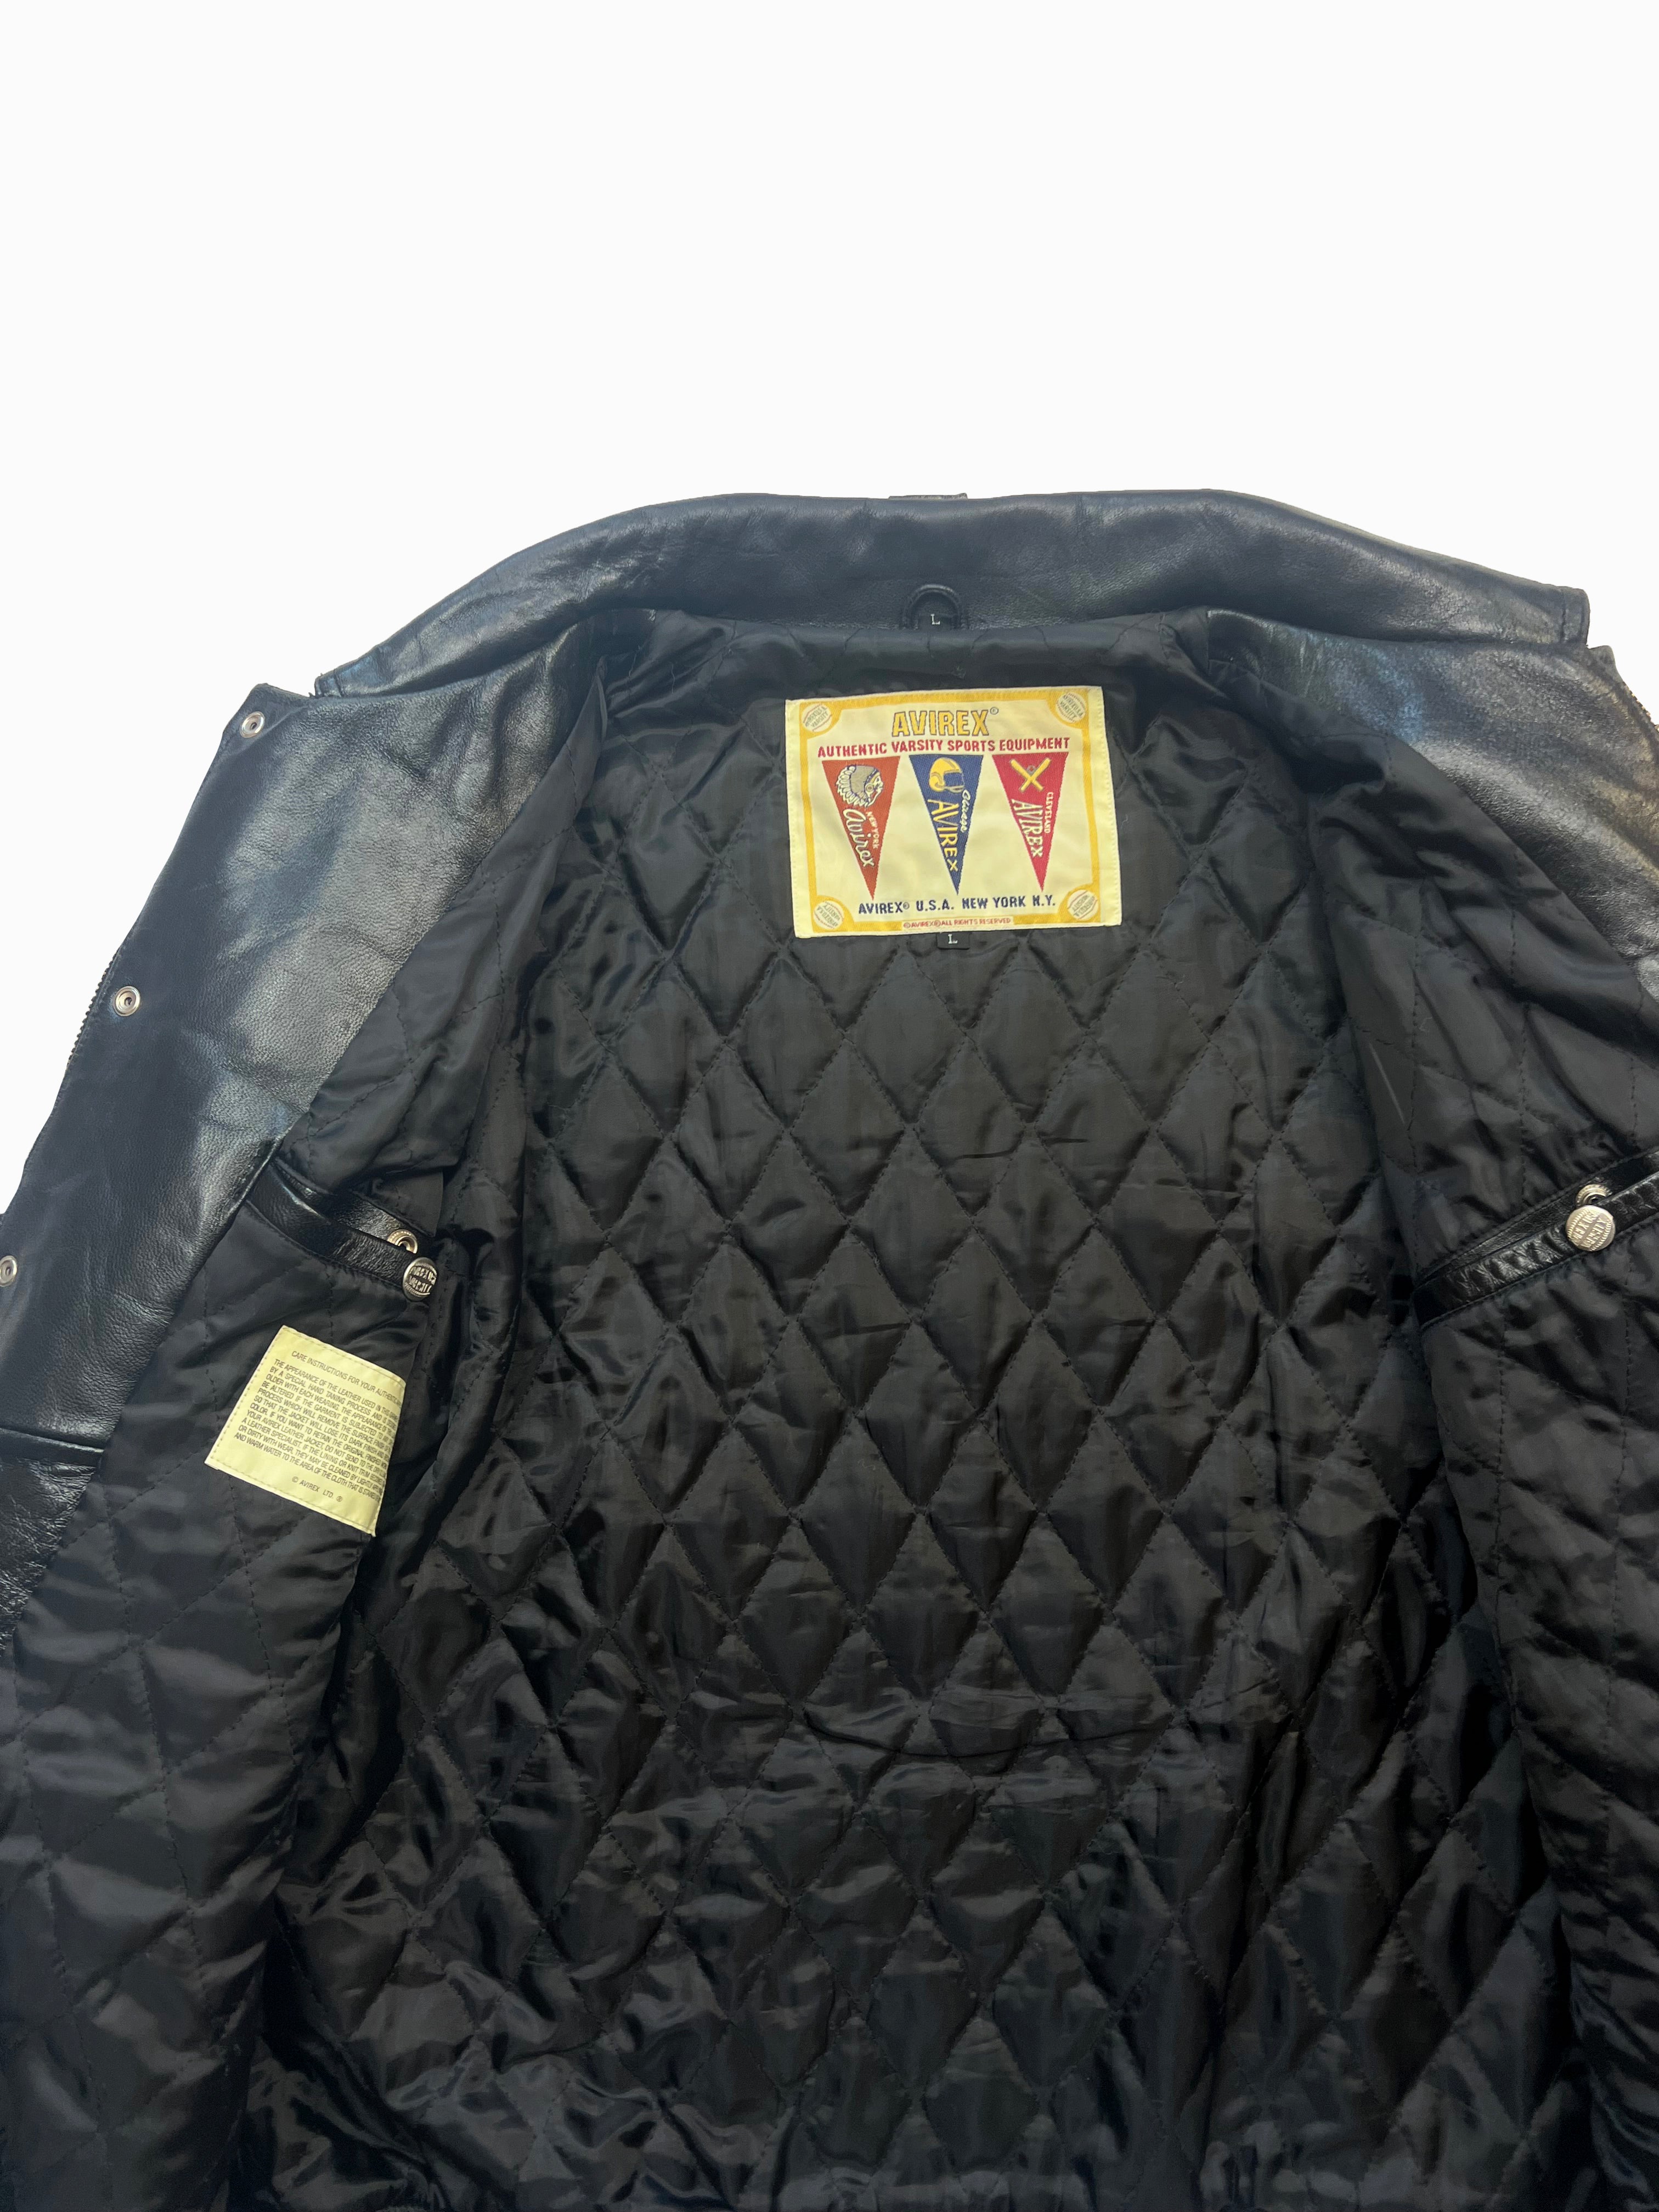 Avirex 'Speed Tiger' Black Leather Jacket 90's